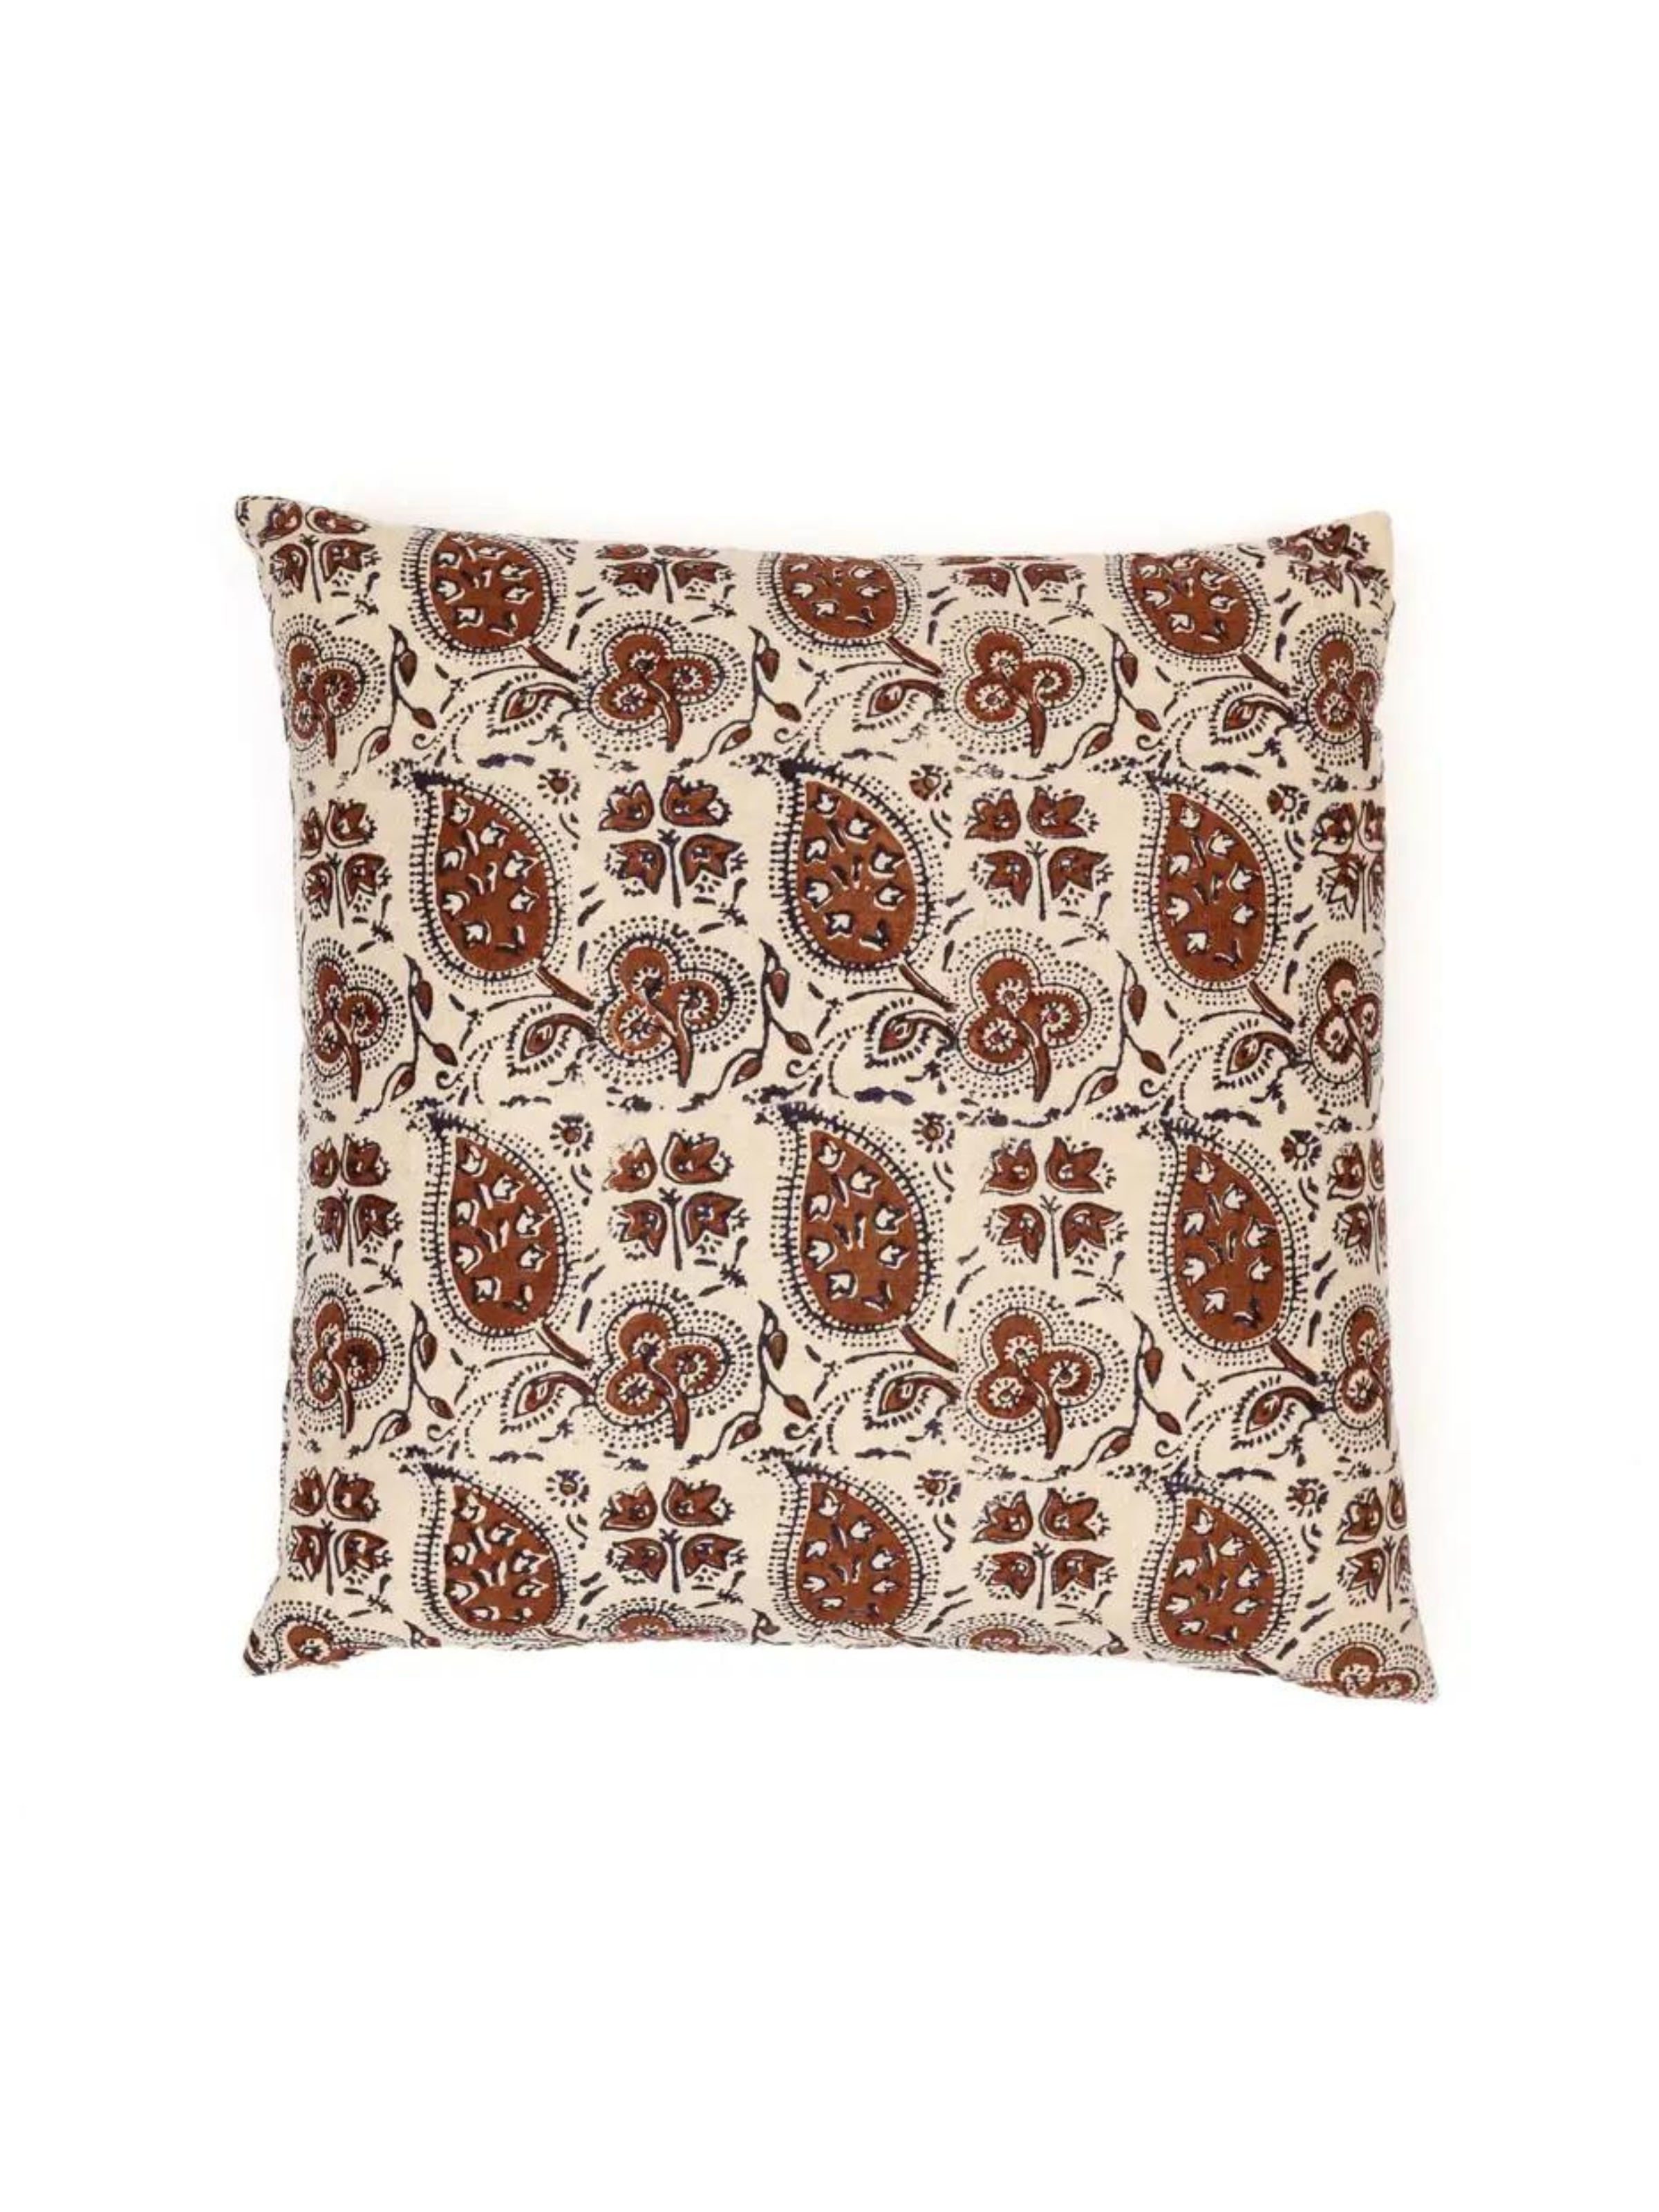 Betel Leaf Charcoal/Cinnamon Decorative Pillow Cover